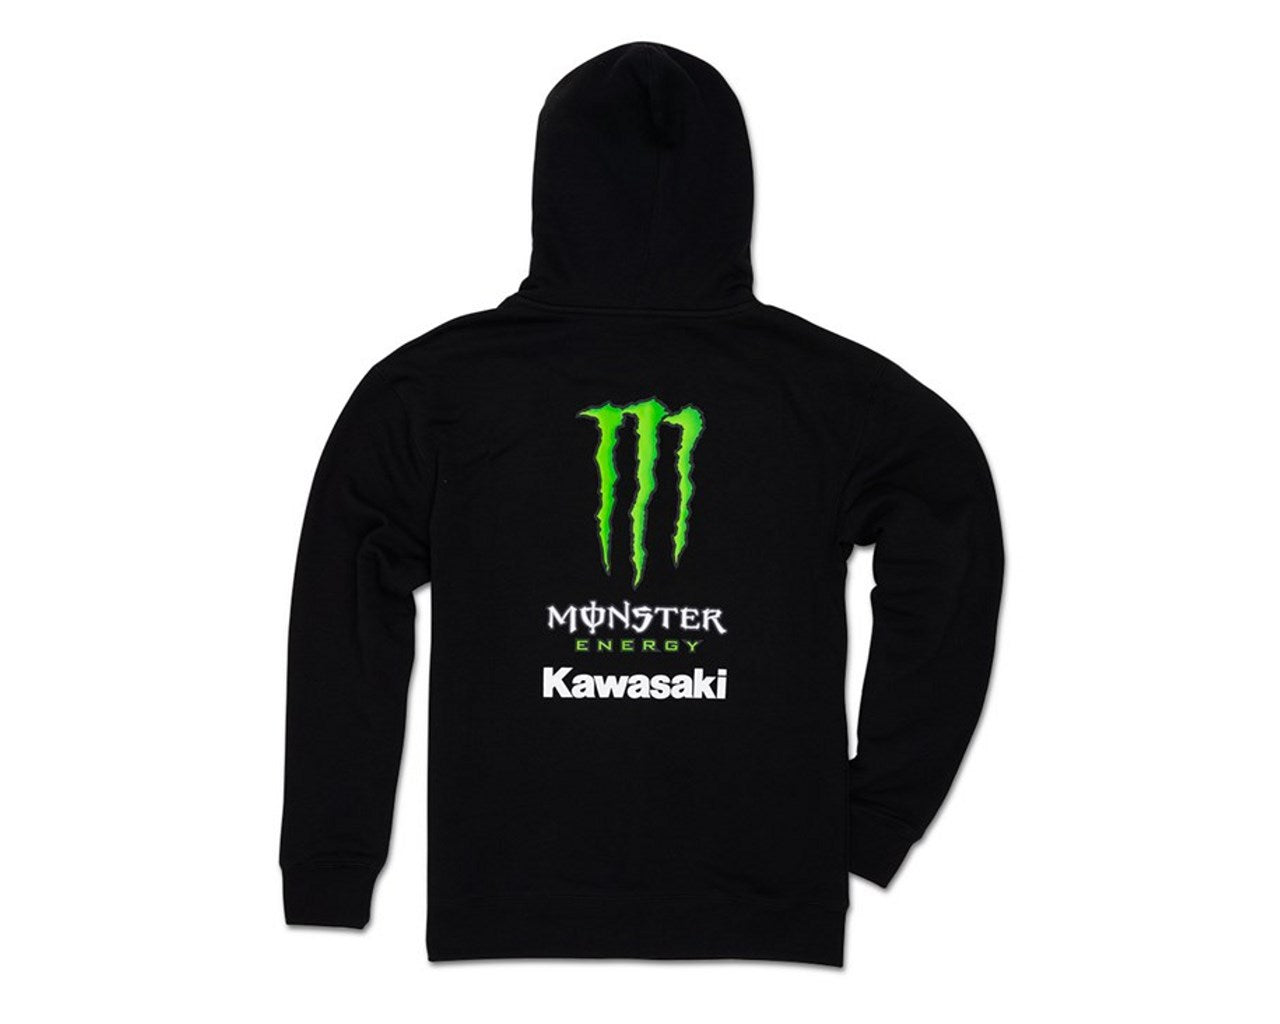 Kawasaki Monster Energy Zip Up Hooded Sweatshirt Black 